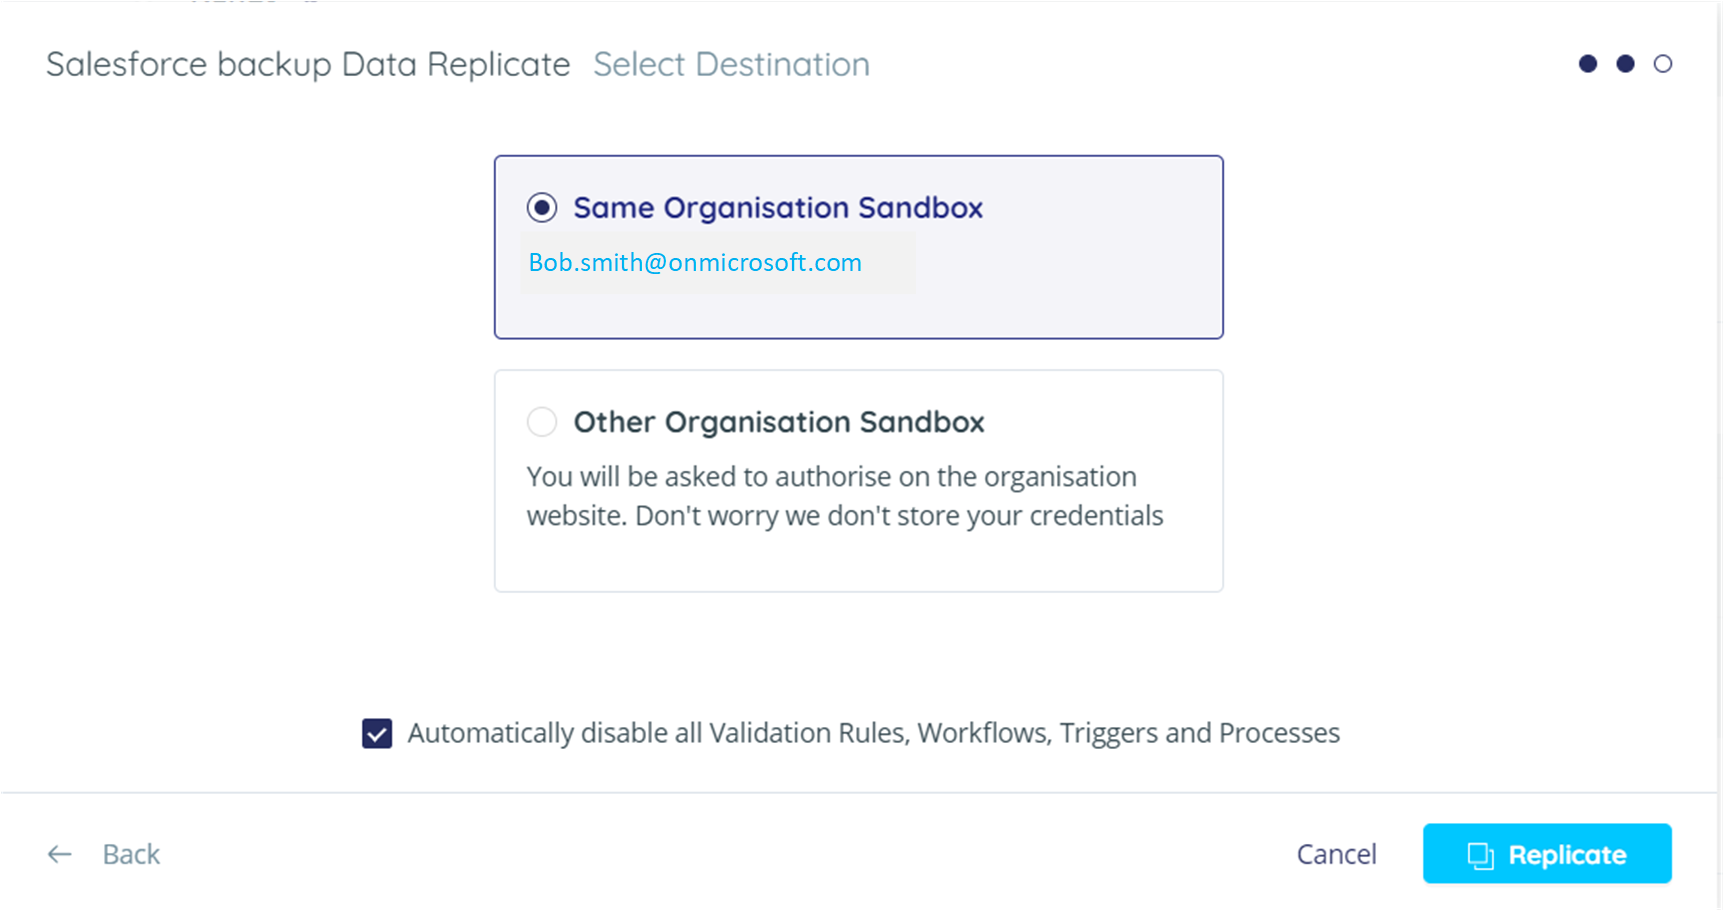 Select destination for data replication. Same organisation sandbox is highlighted.